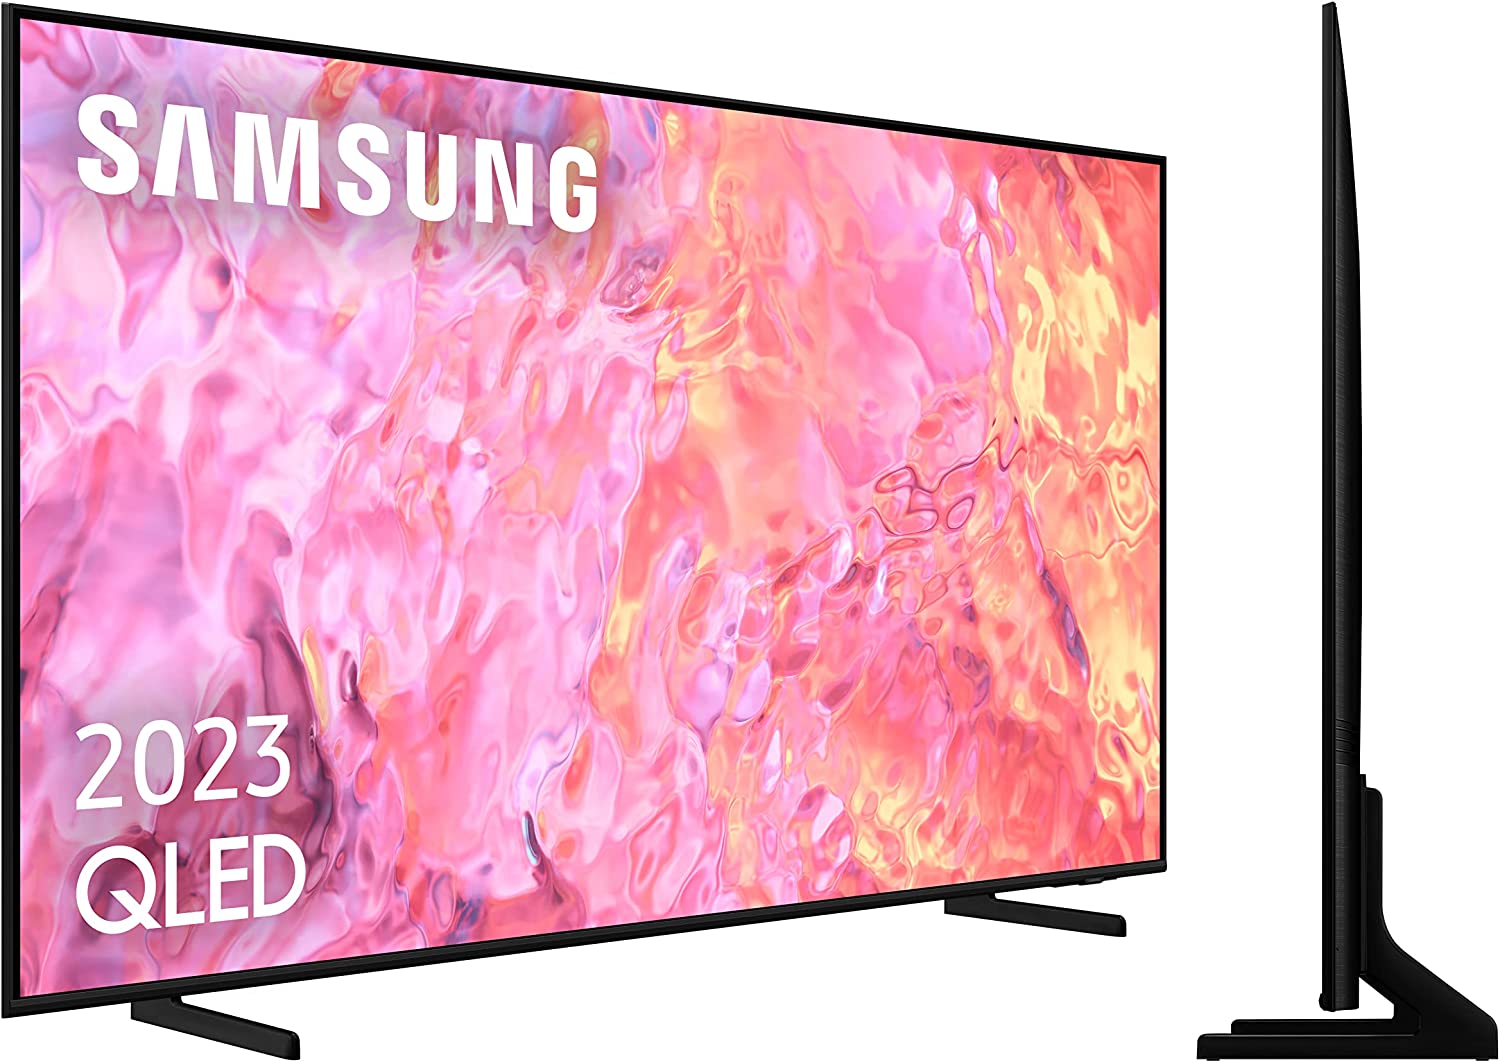 Samsung TV QLED 43Q60C vs. Samsung Crystal UHD 50CU8000